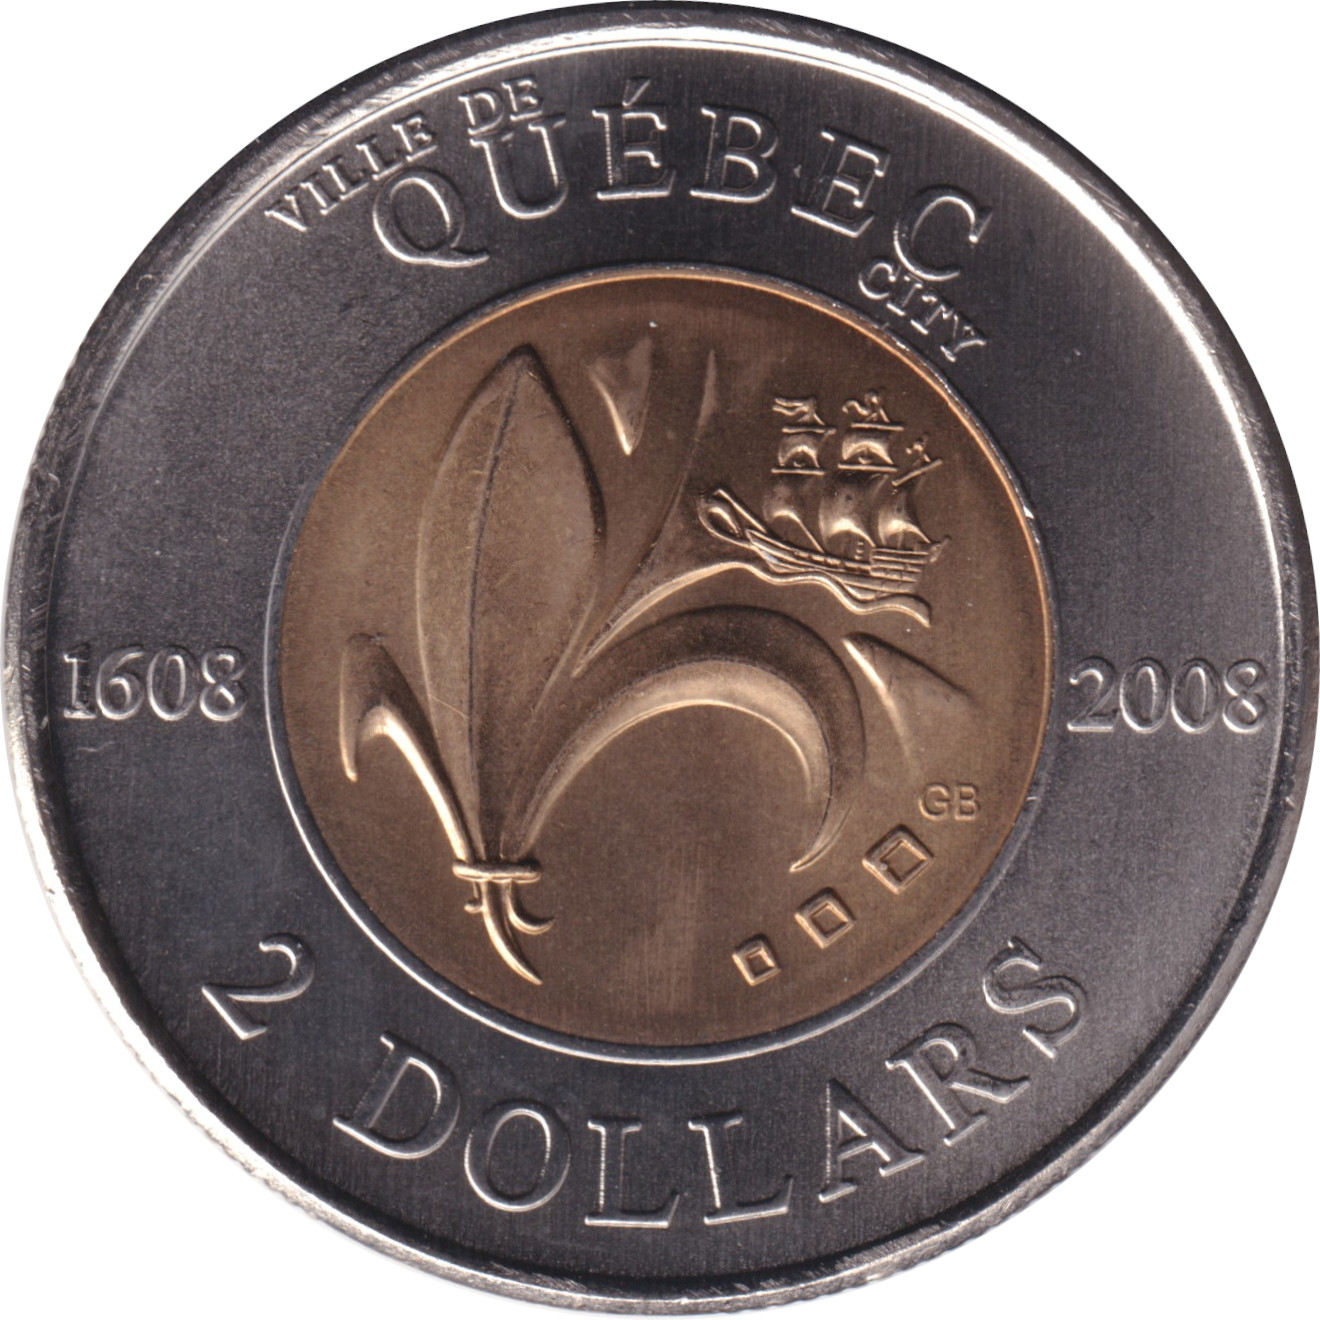 2 dollars - Québec - 400 years